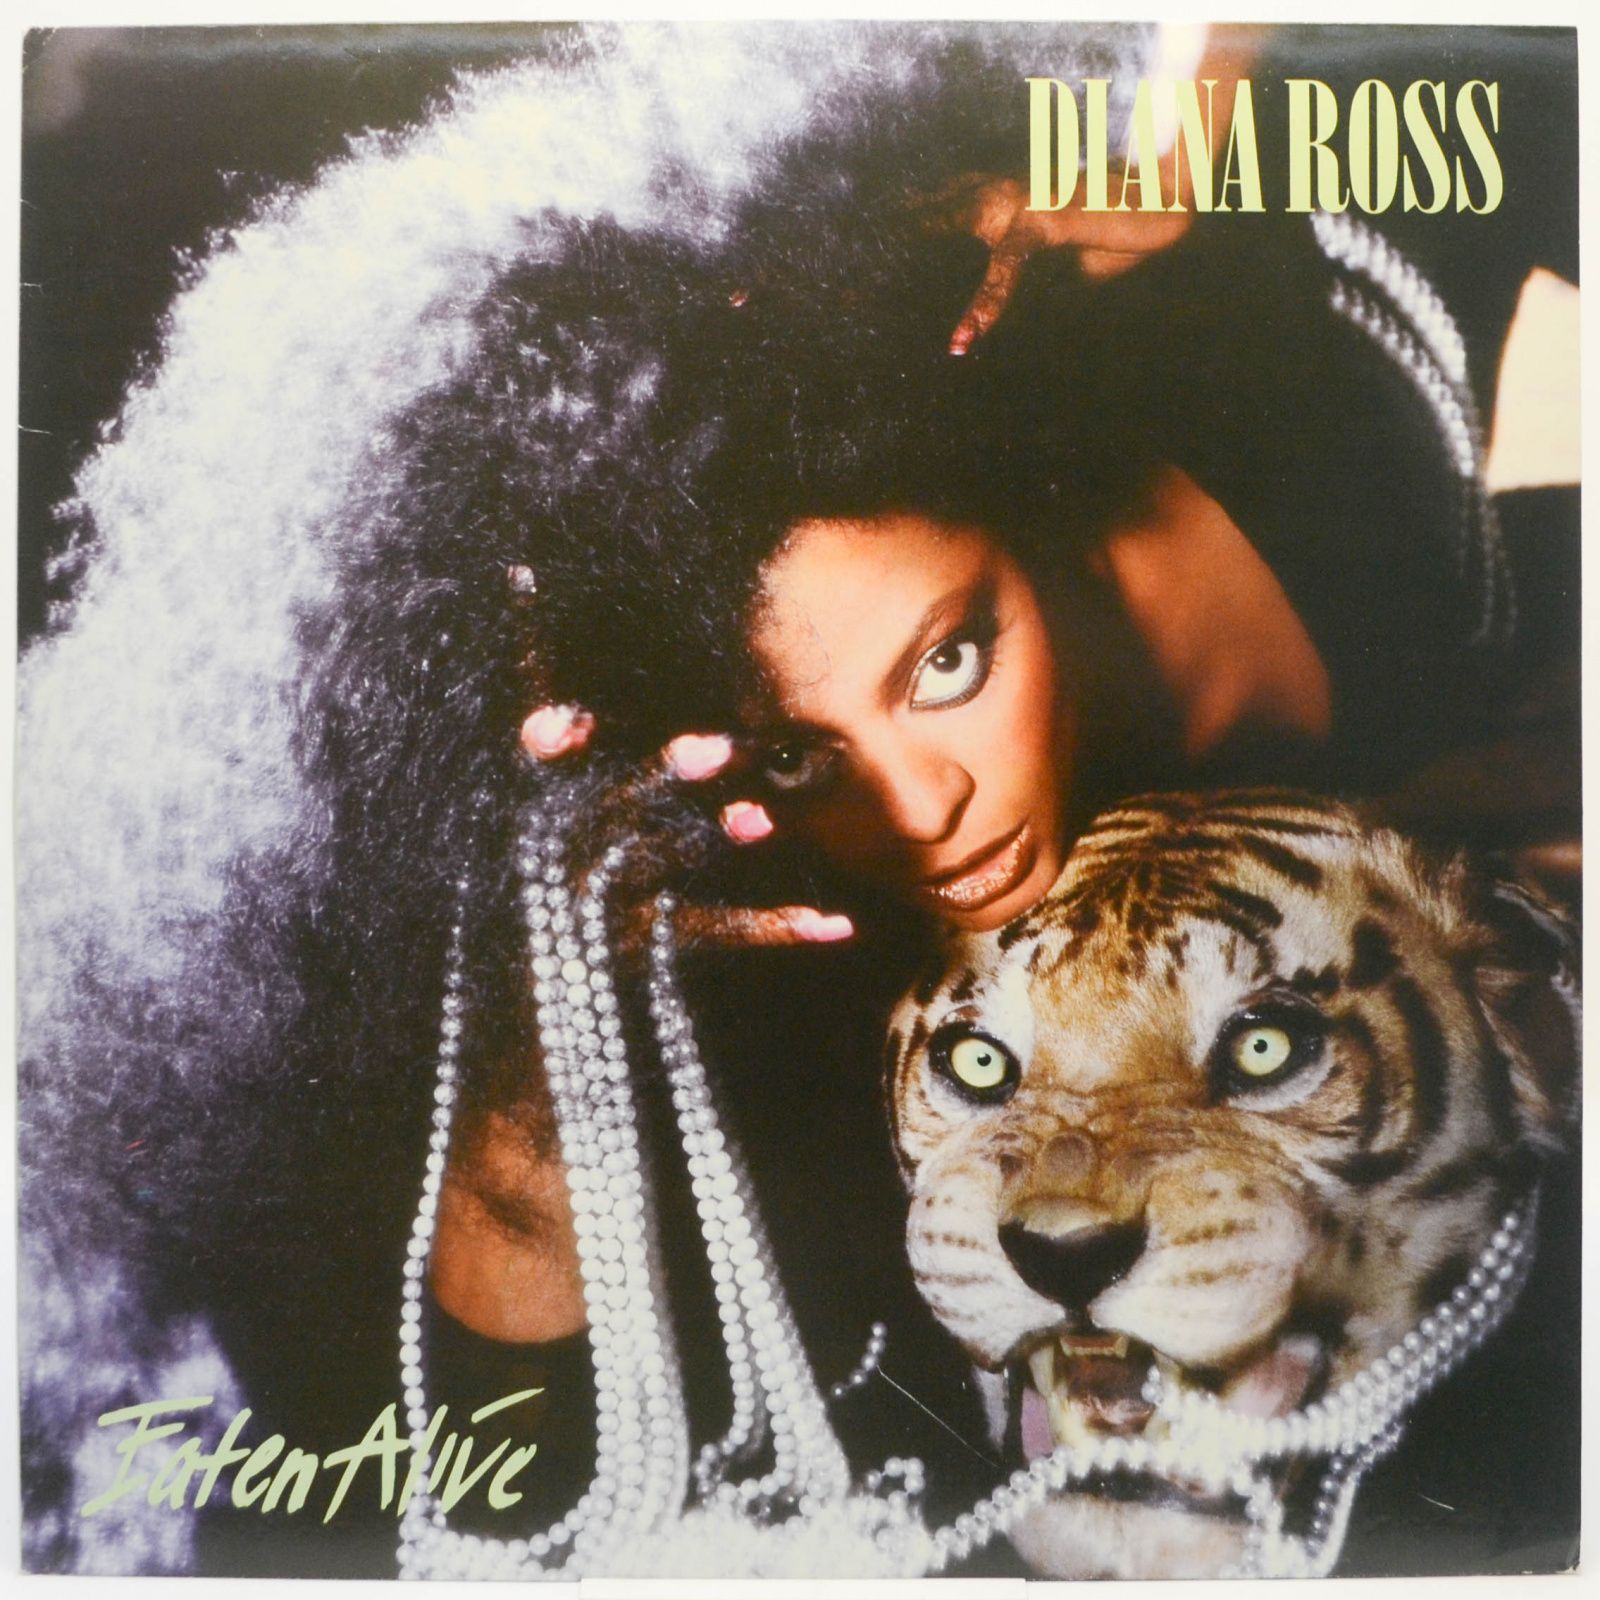 Diana Ross — Eaten Alive, 1985